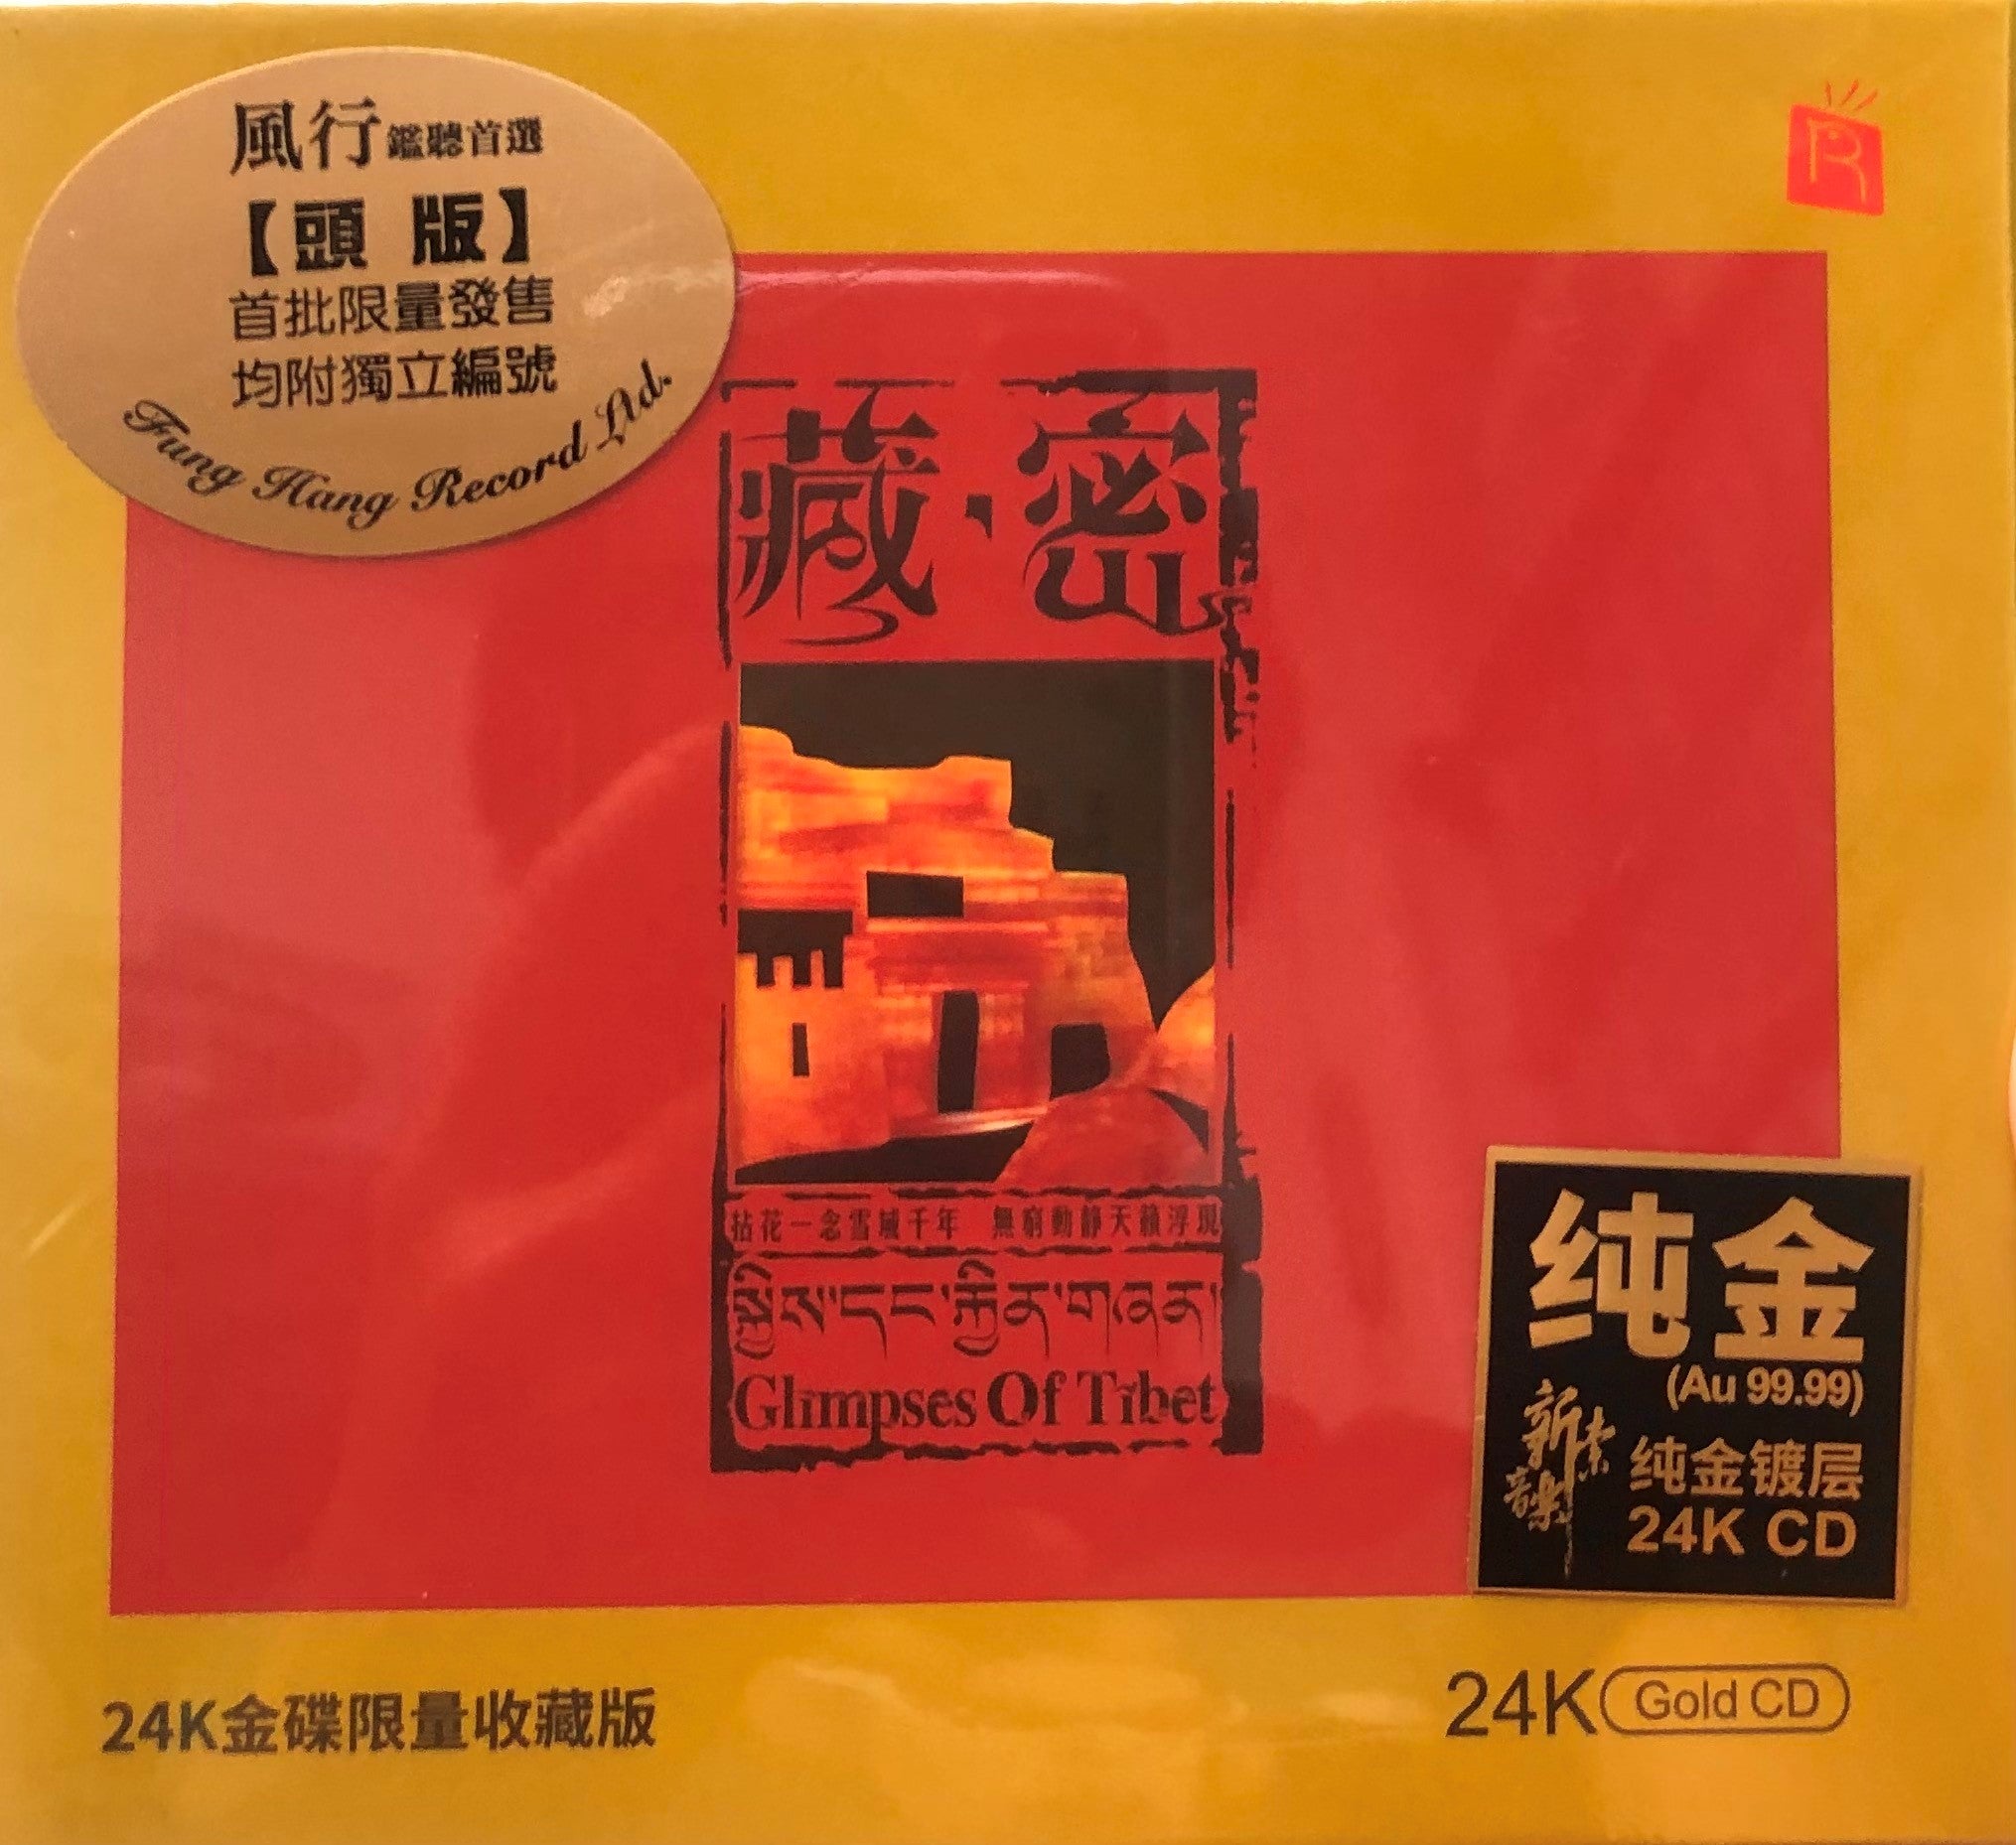 GLIMPSES OF TIBET 藏密 - WORLD MUSIC (24K GOLD) CD